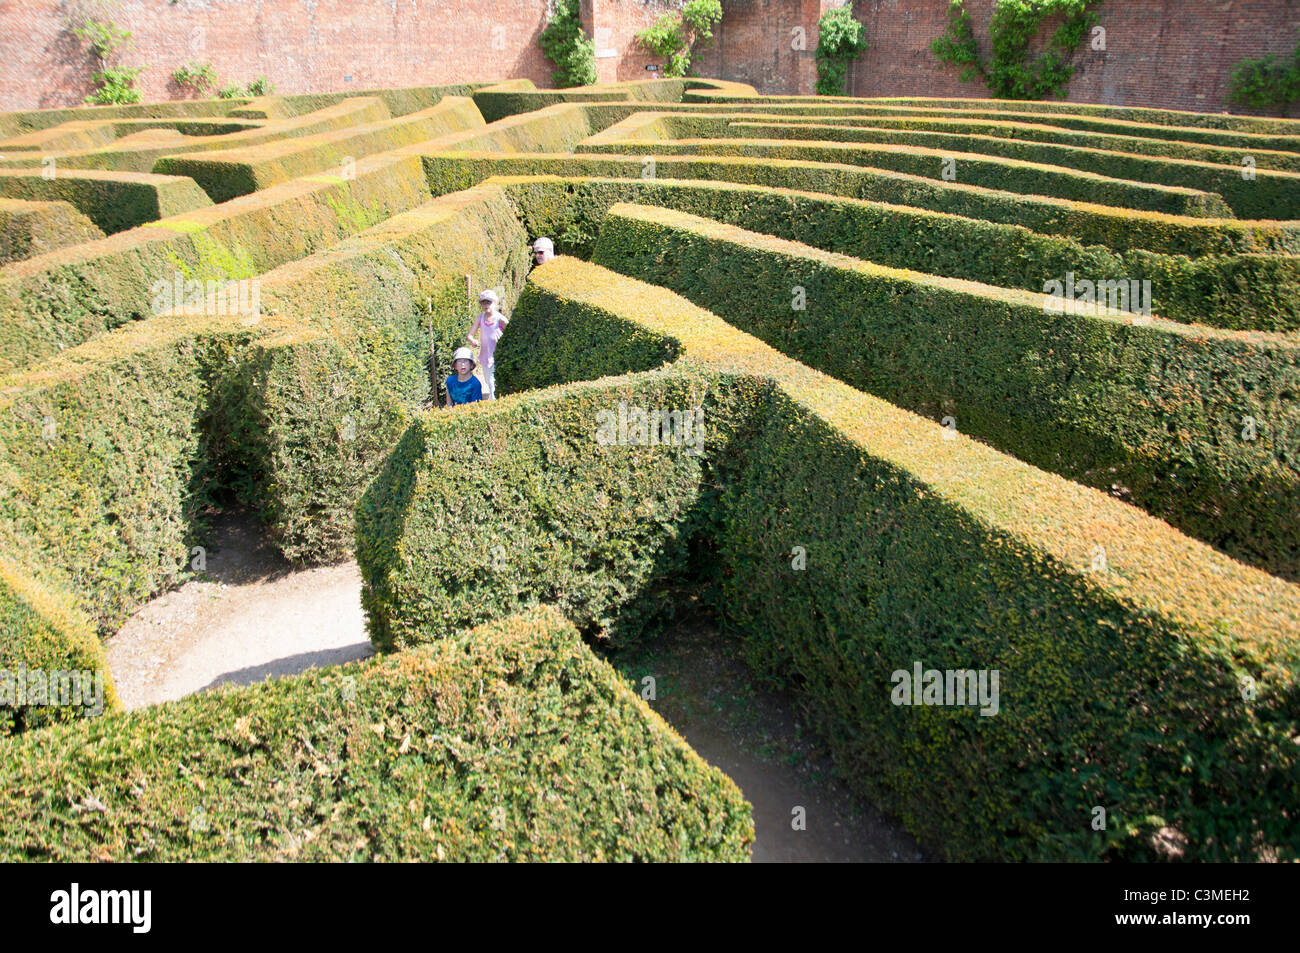 Blenheim palace maze, Oxfordshire, England. Stock Photo